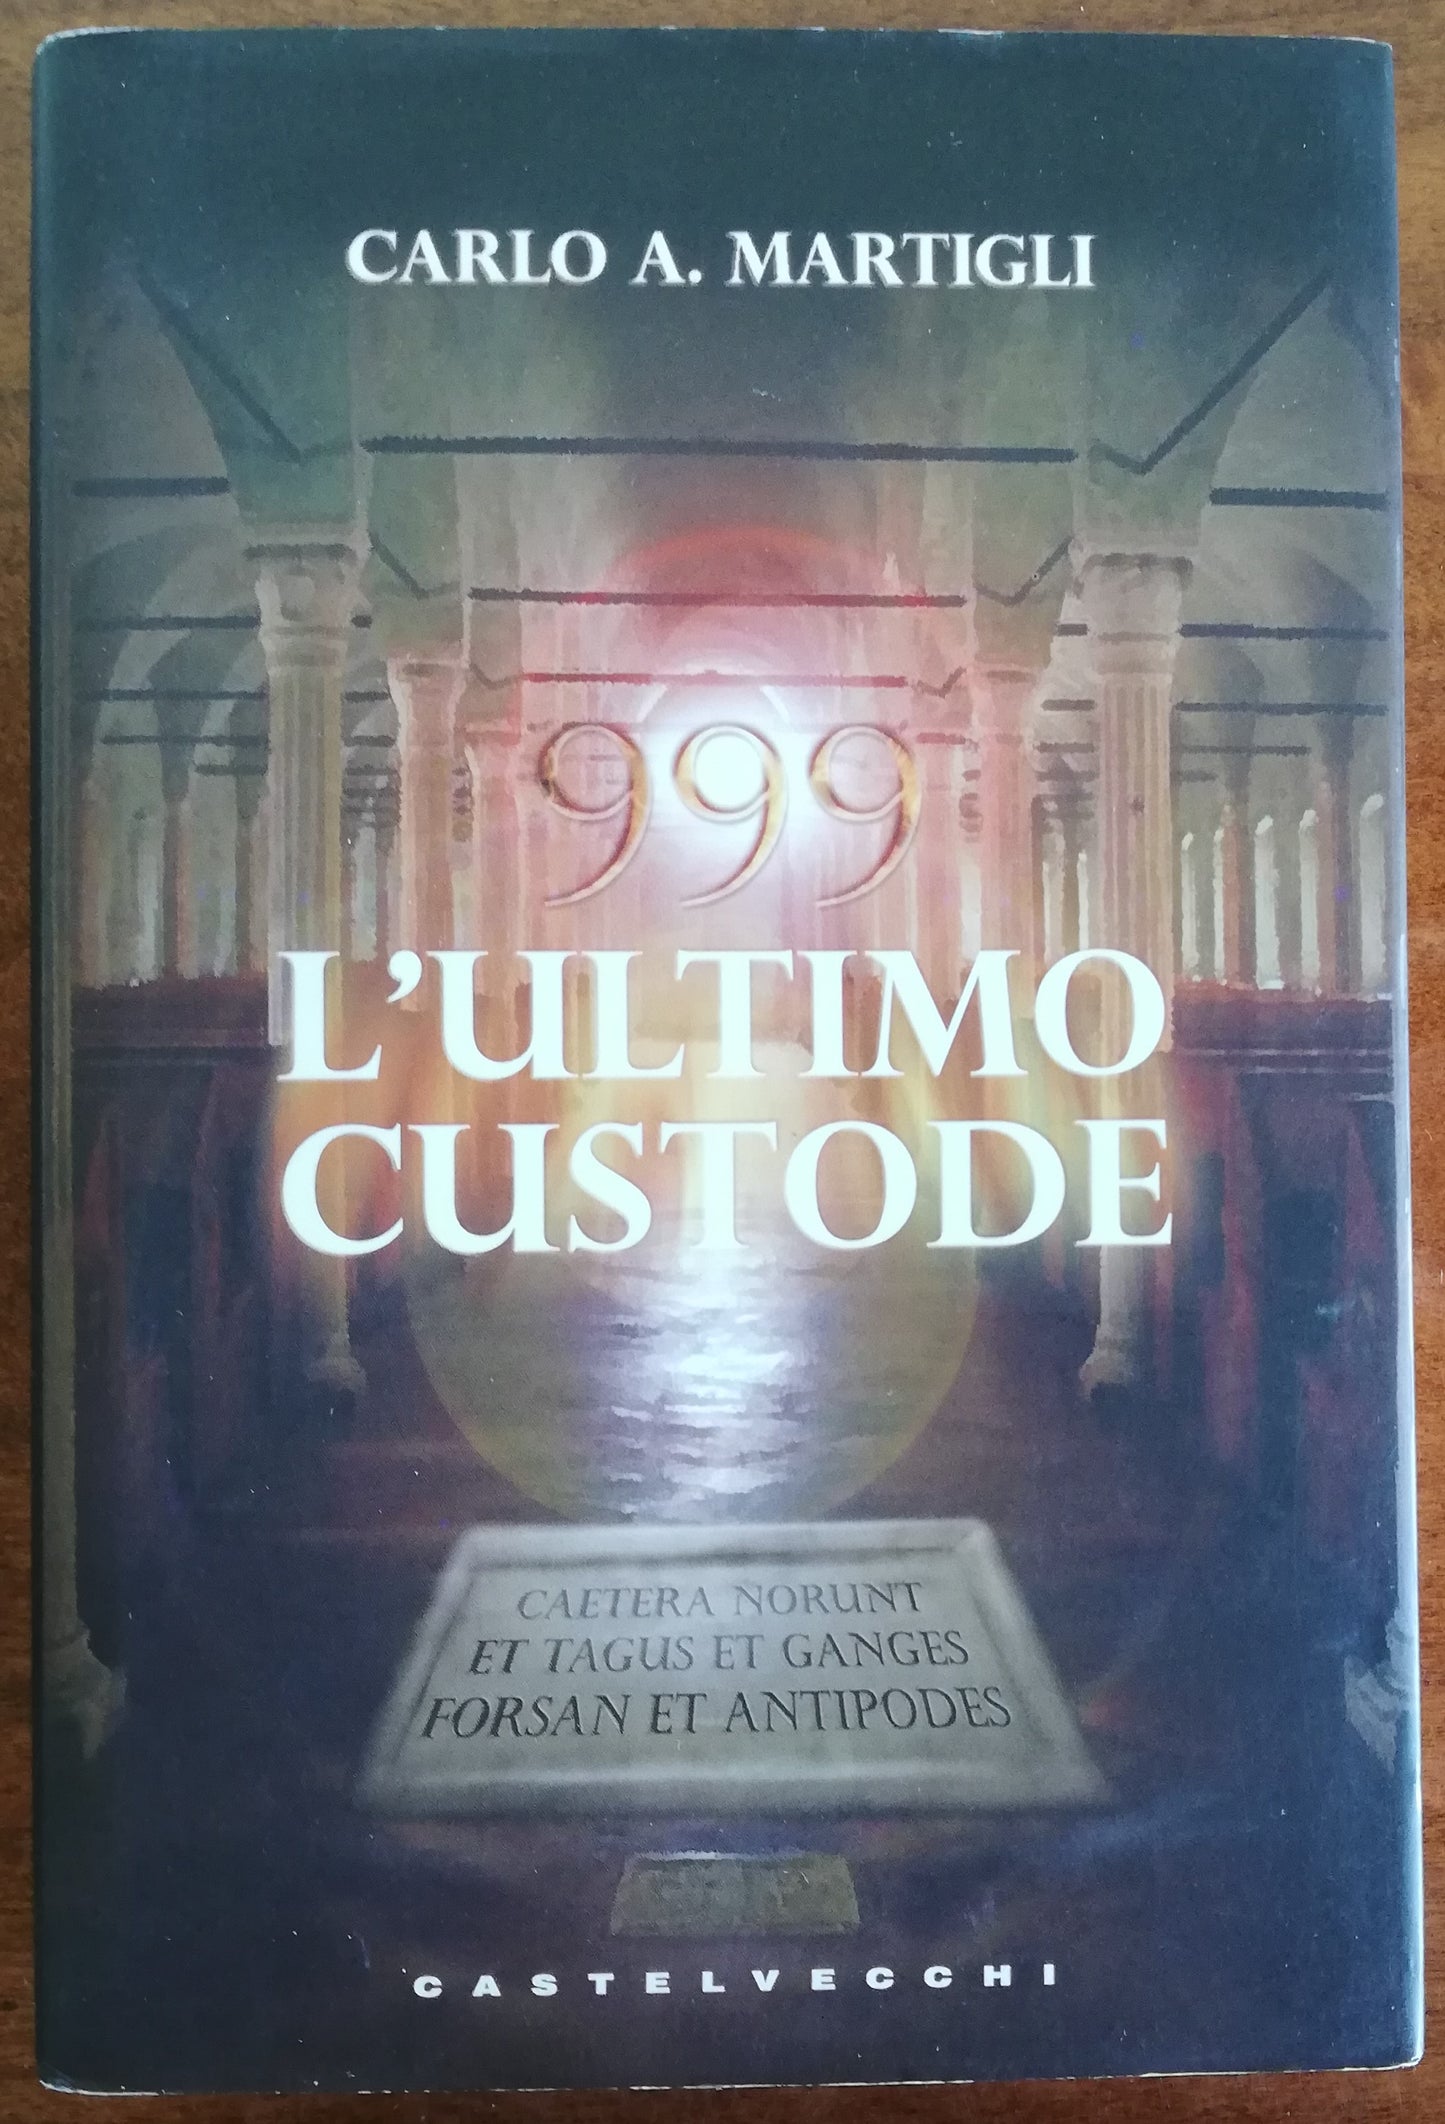 999 L’ultimo custode - Castelvecchi